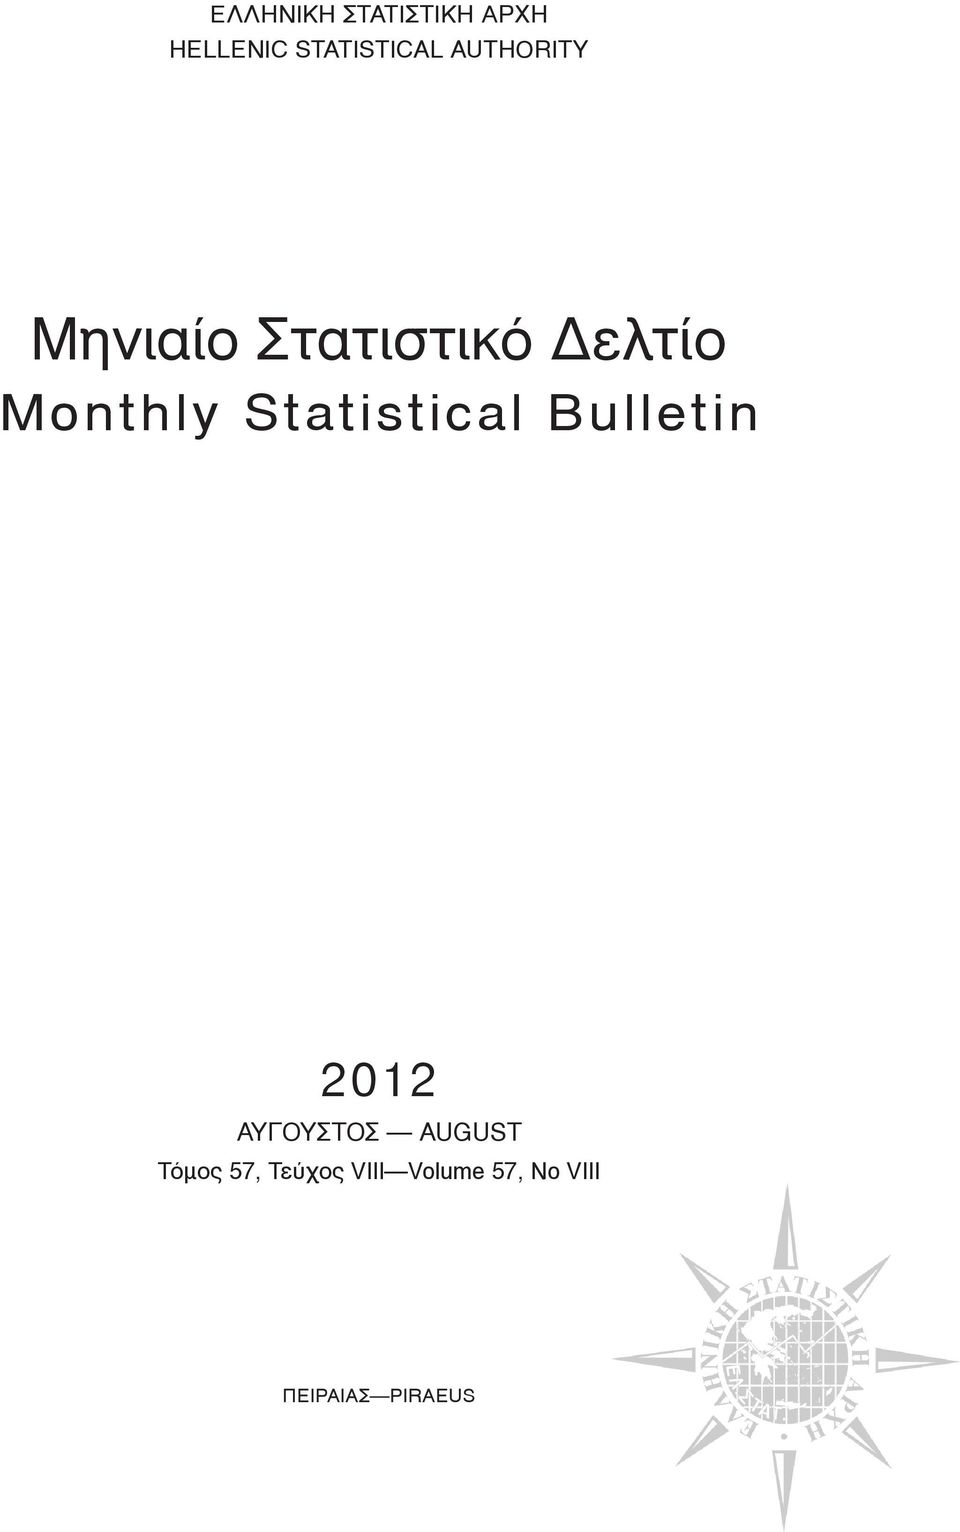 Statistical Bulletin 2012 ΑΥΓΟΥΣΤΟΣ AUGUST